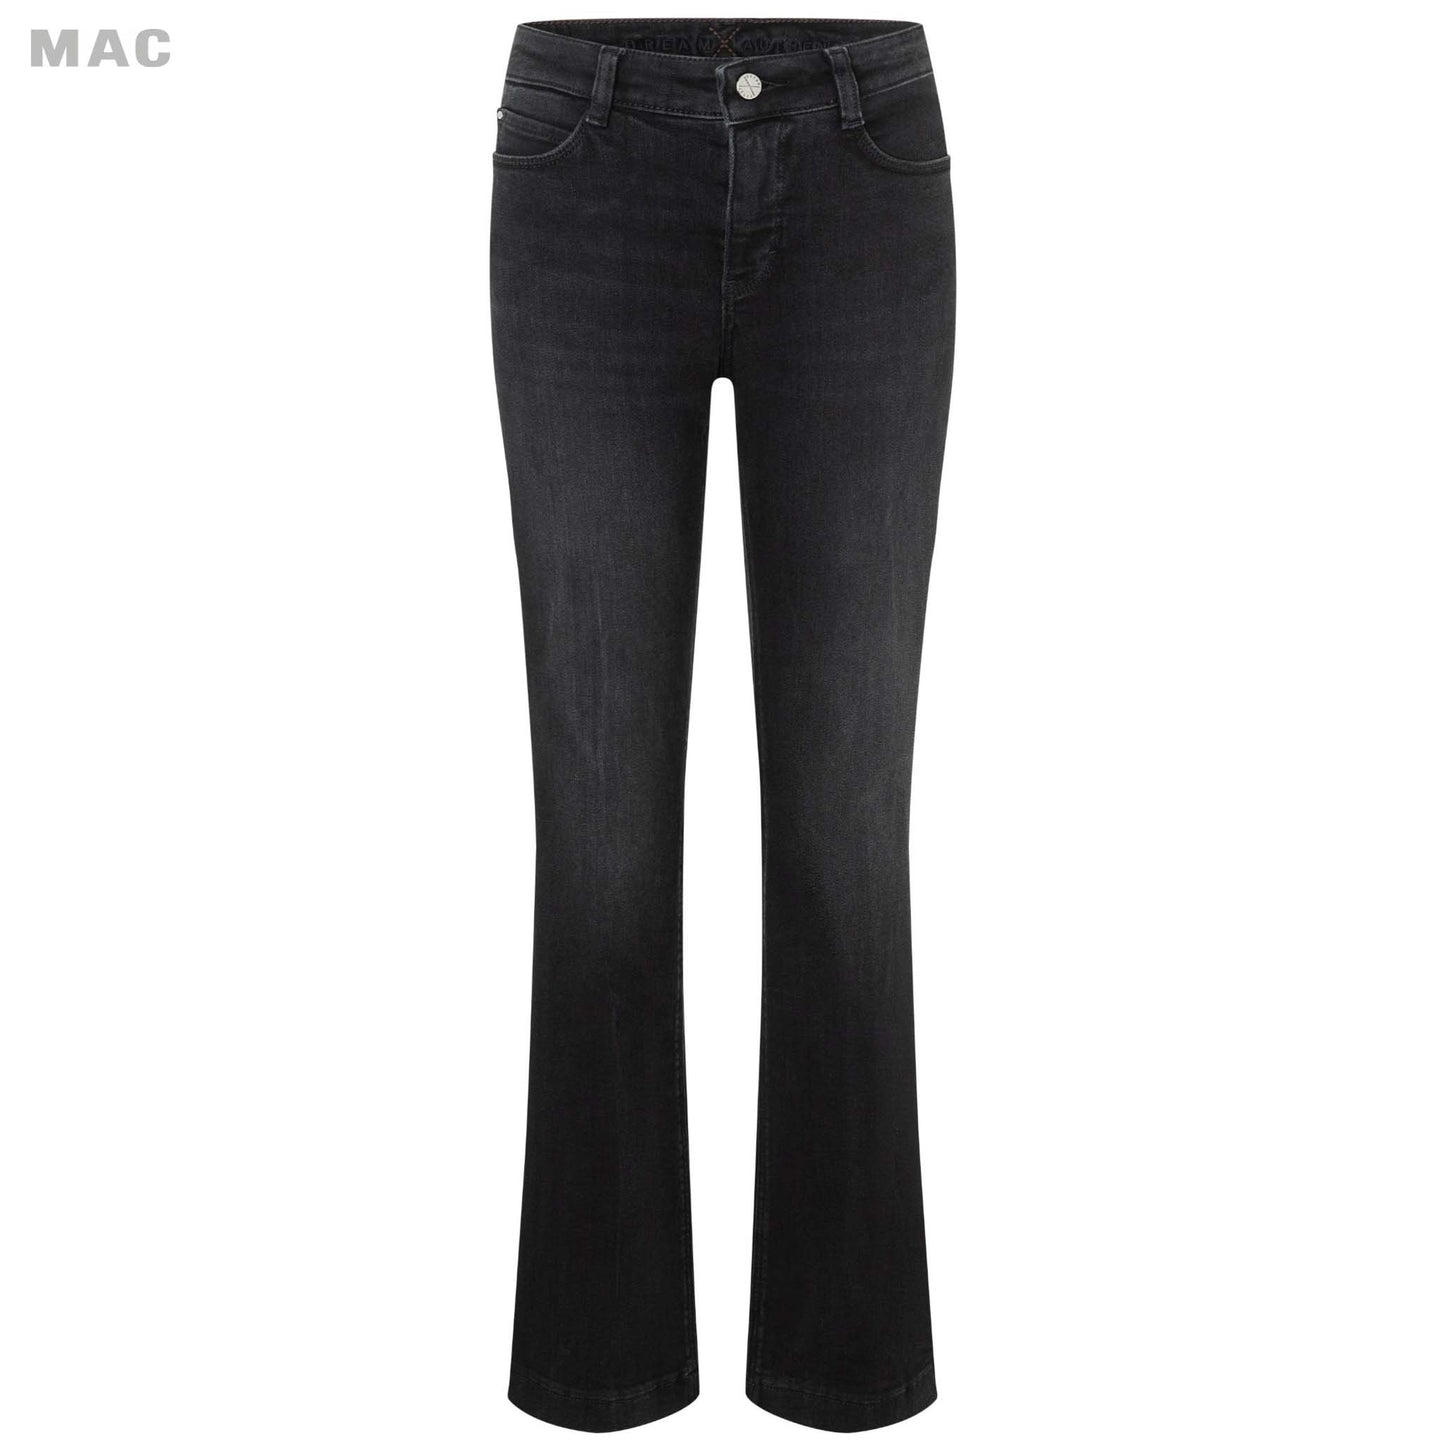 kleding lange vrouwen mac jeans dream boot auth modern black